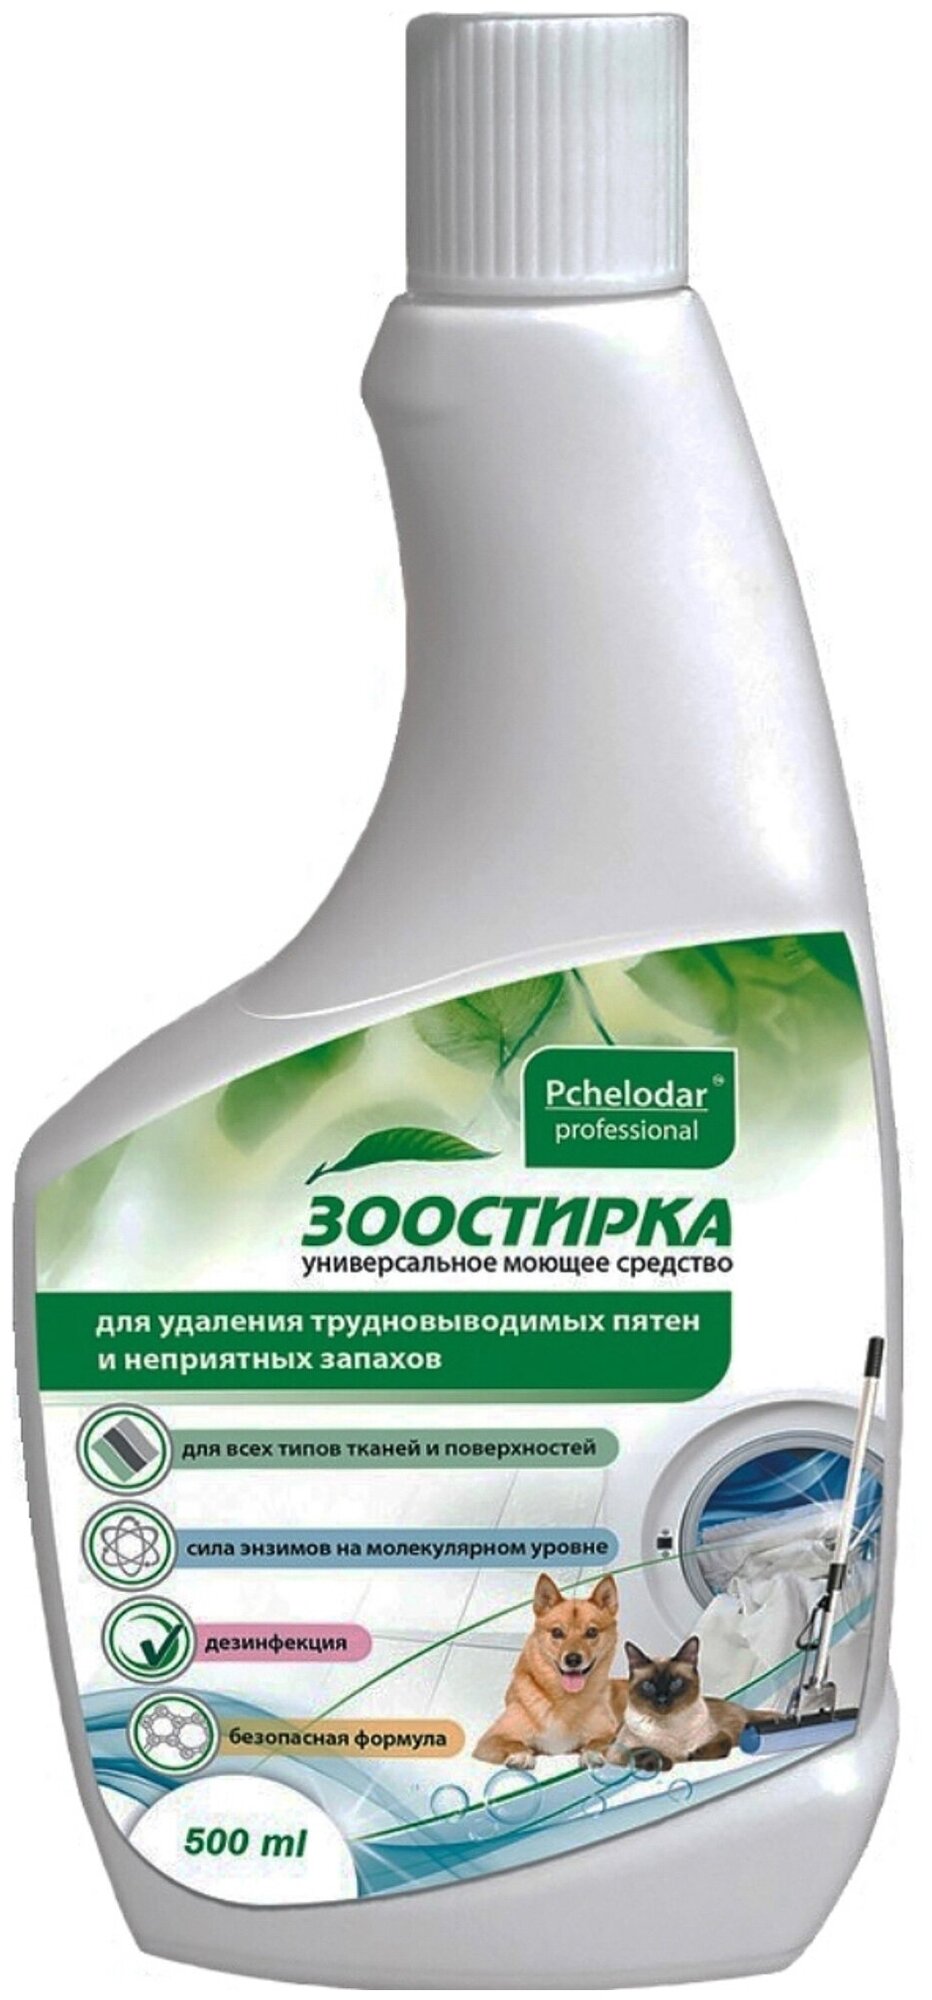 Pchelodar (Пчелодар), серия Professional зоостирка, средство для стирки и чистки загрязнений животного происхождения, 500 мл